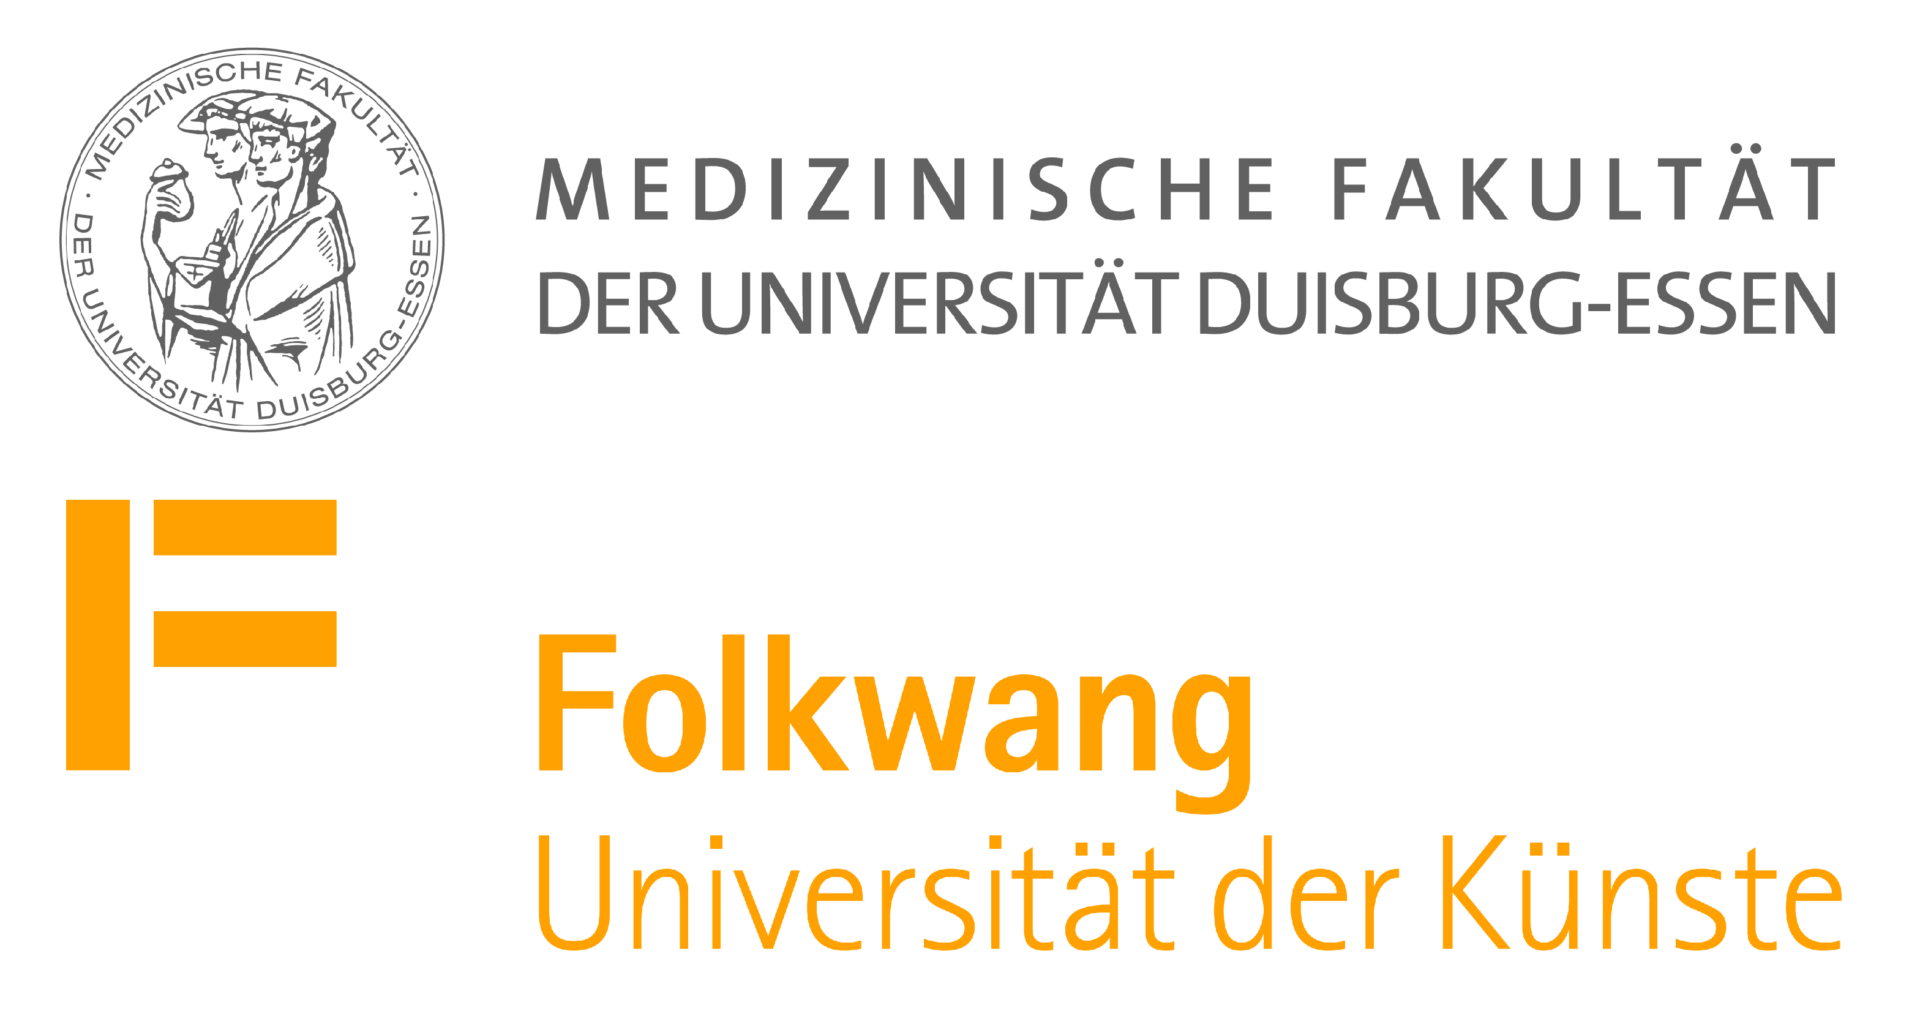 Folkwang Universität der Künste / Medizinische Fakultät der Universität Duisburg-Essen